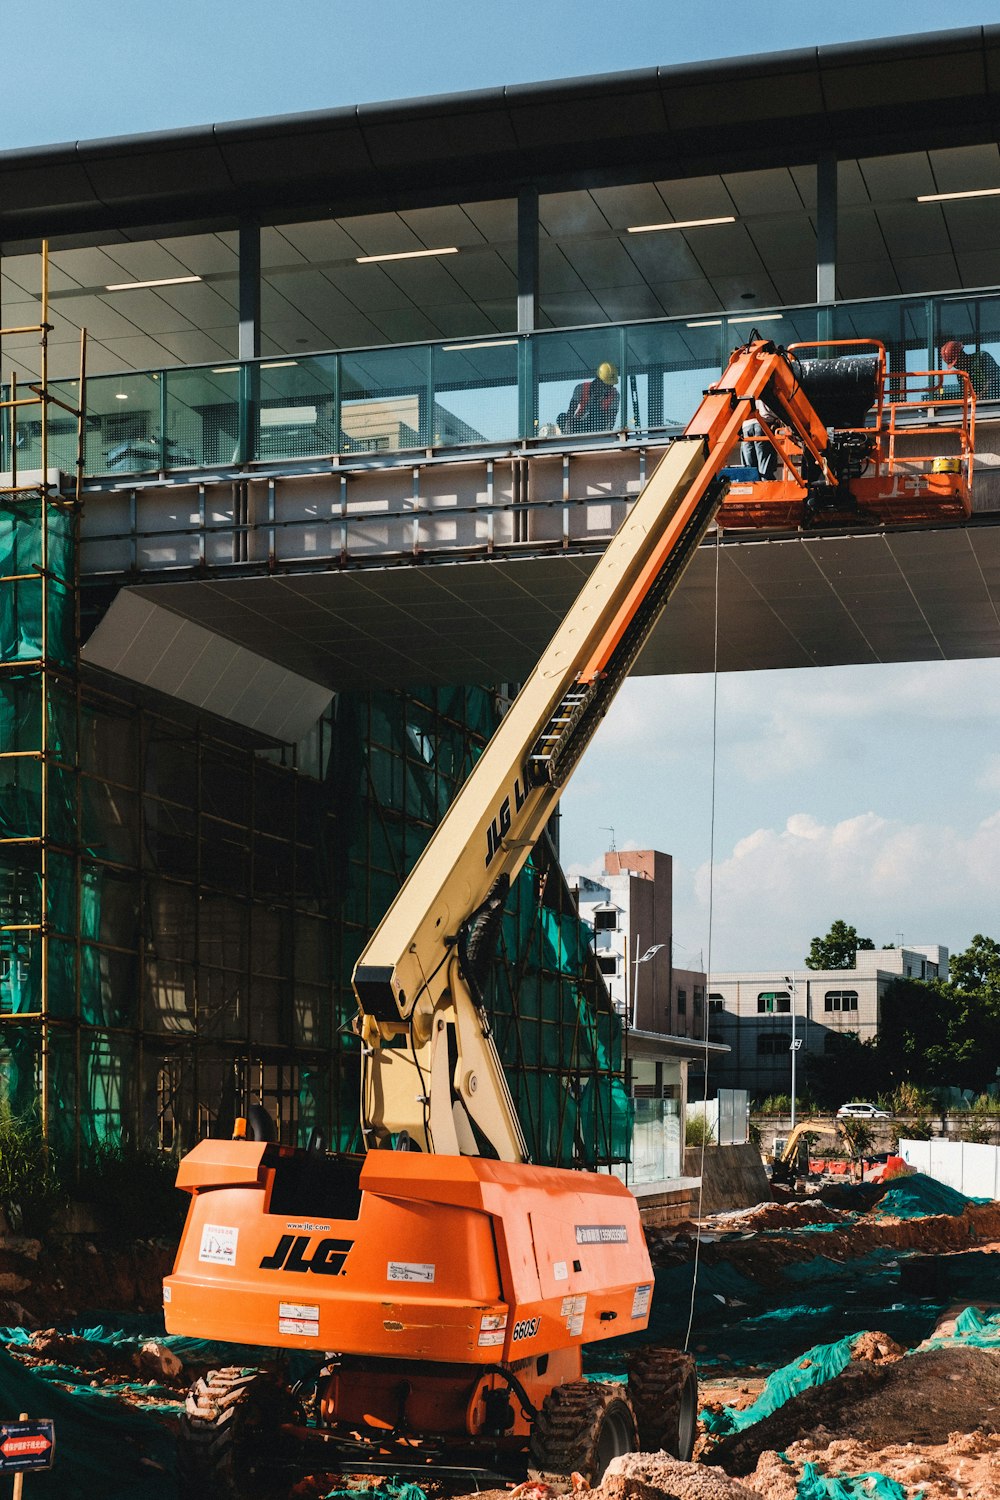 orange and black crane near building during daytime